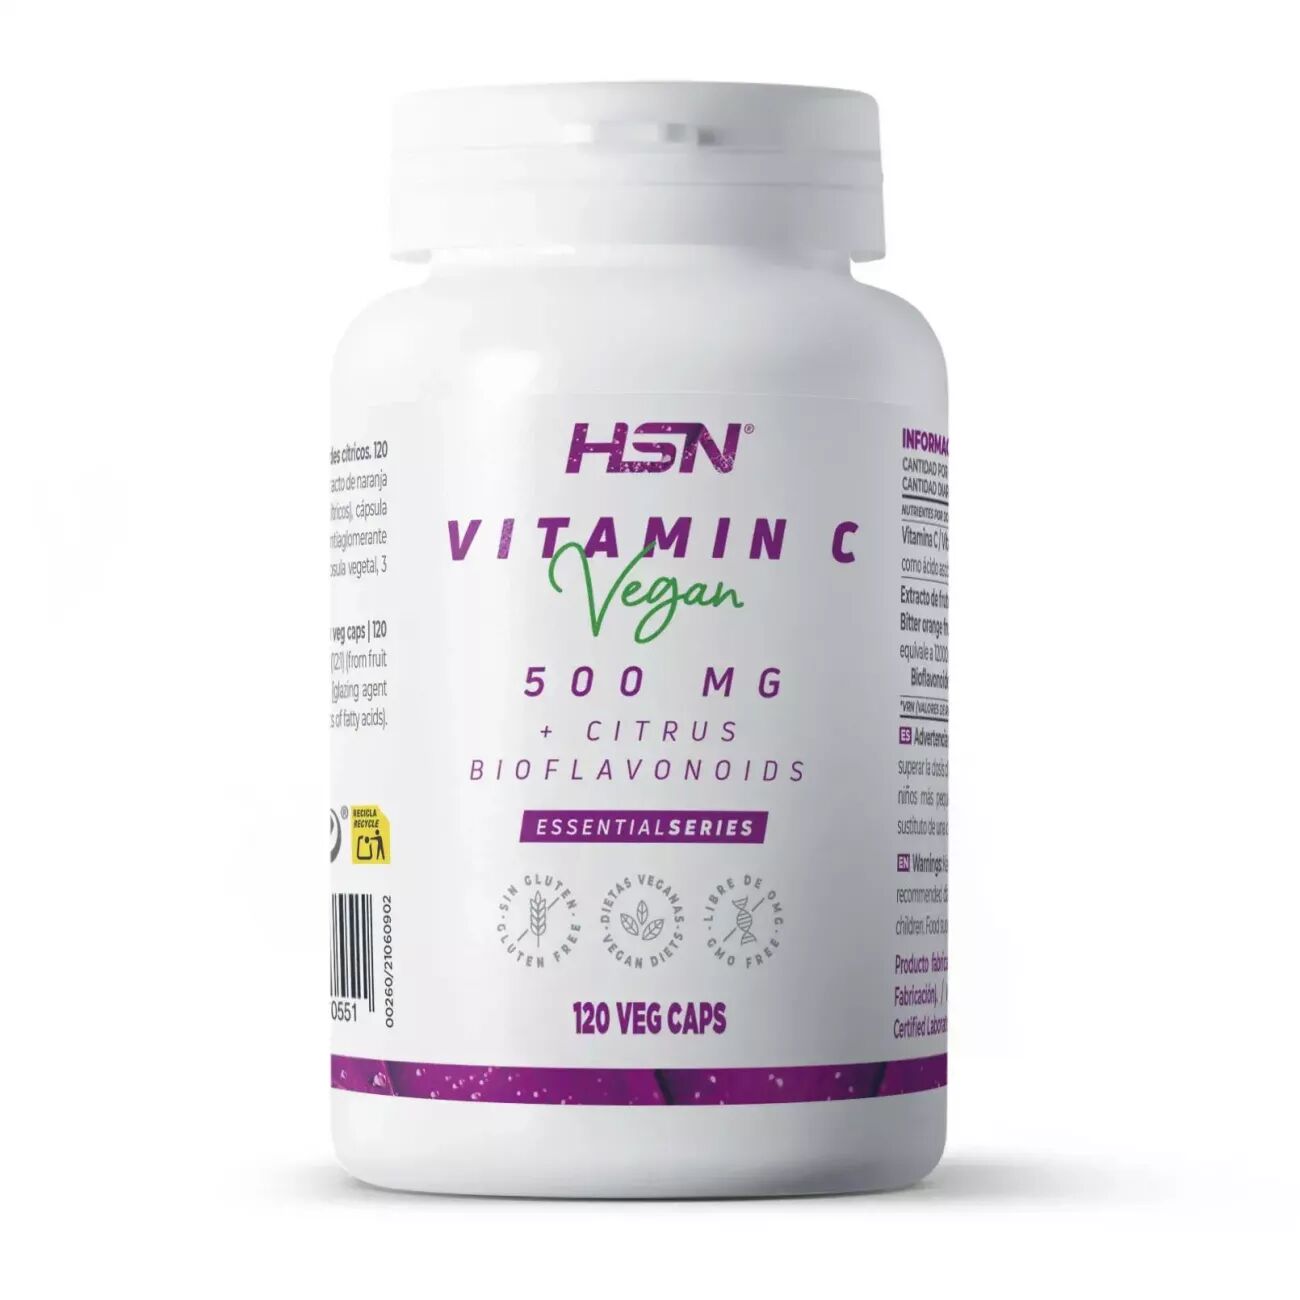 HSN Vitamina c 500mg + bioflavonoides cítricos - 120 veg caps